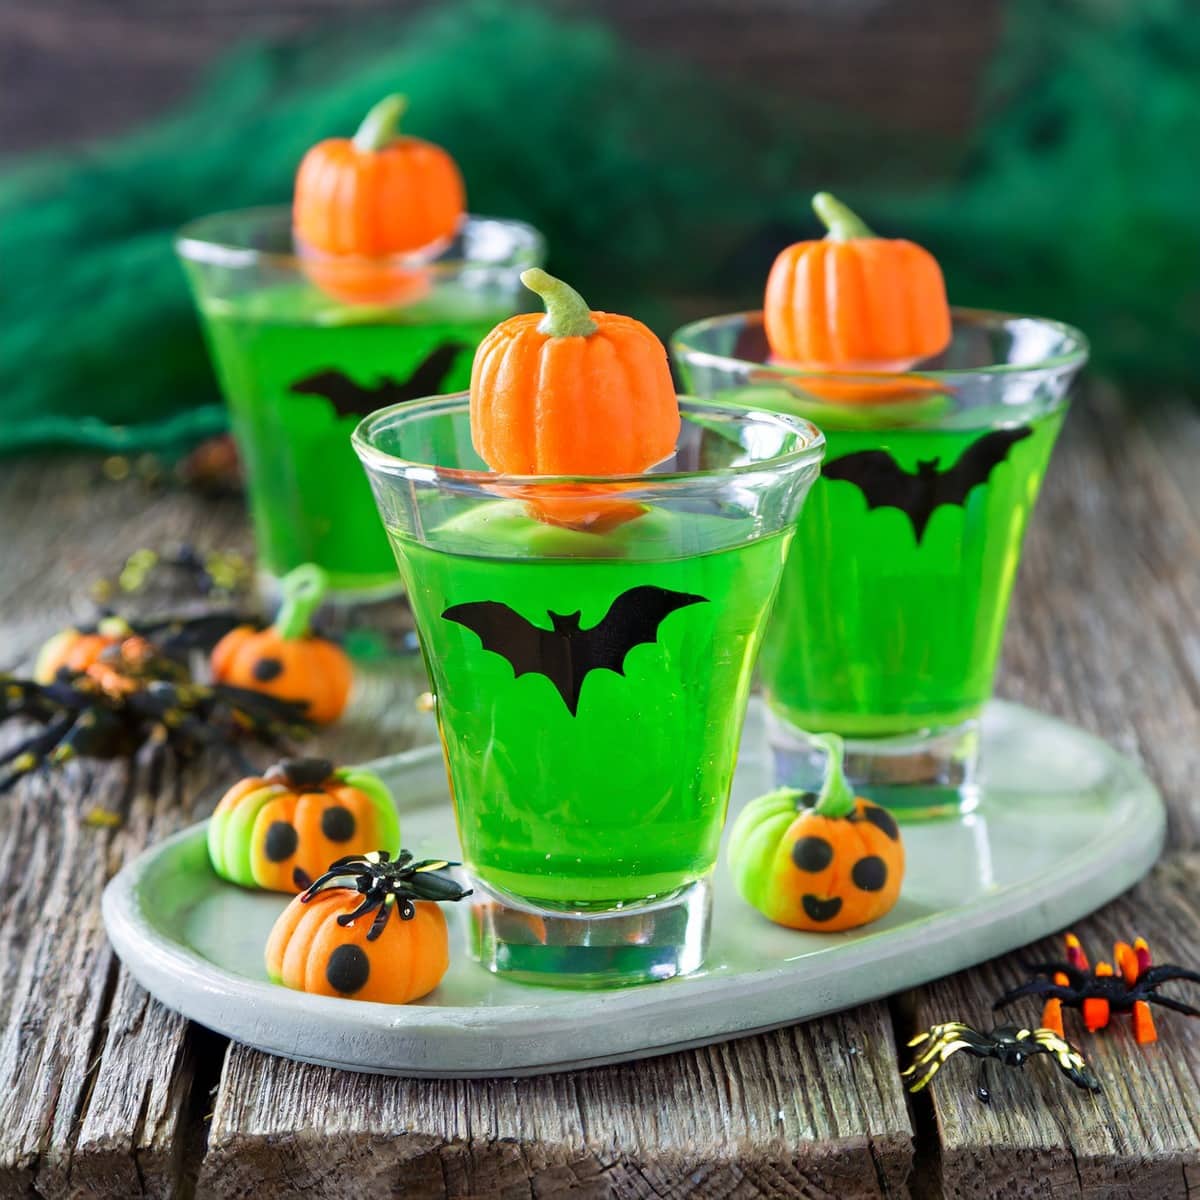 Green Jello shots for Halloween with mini pumpkins